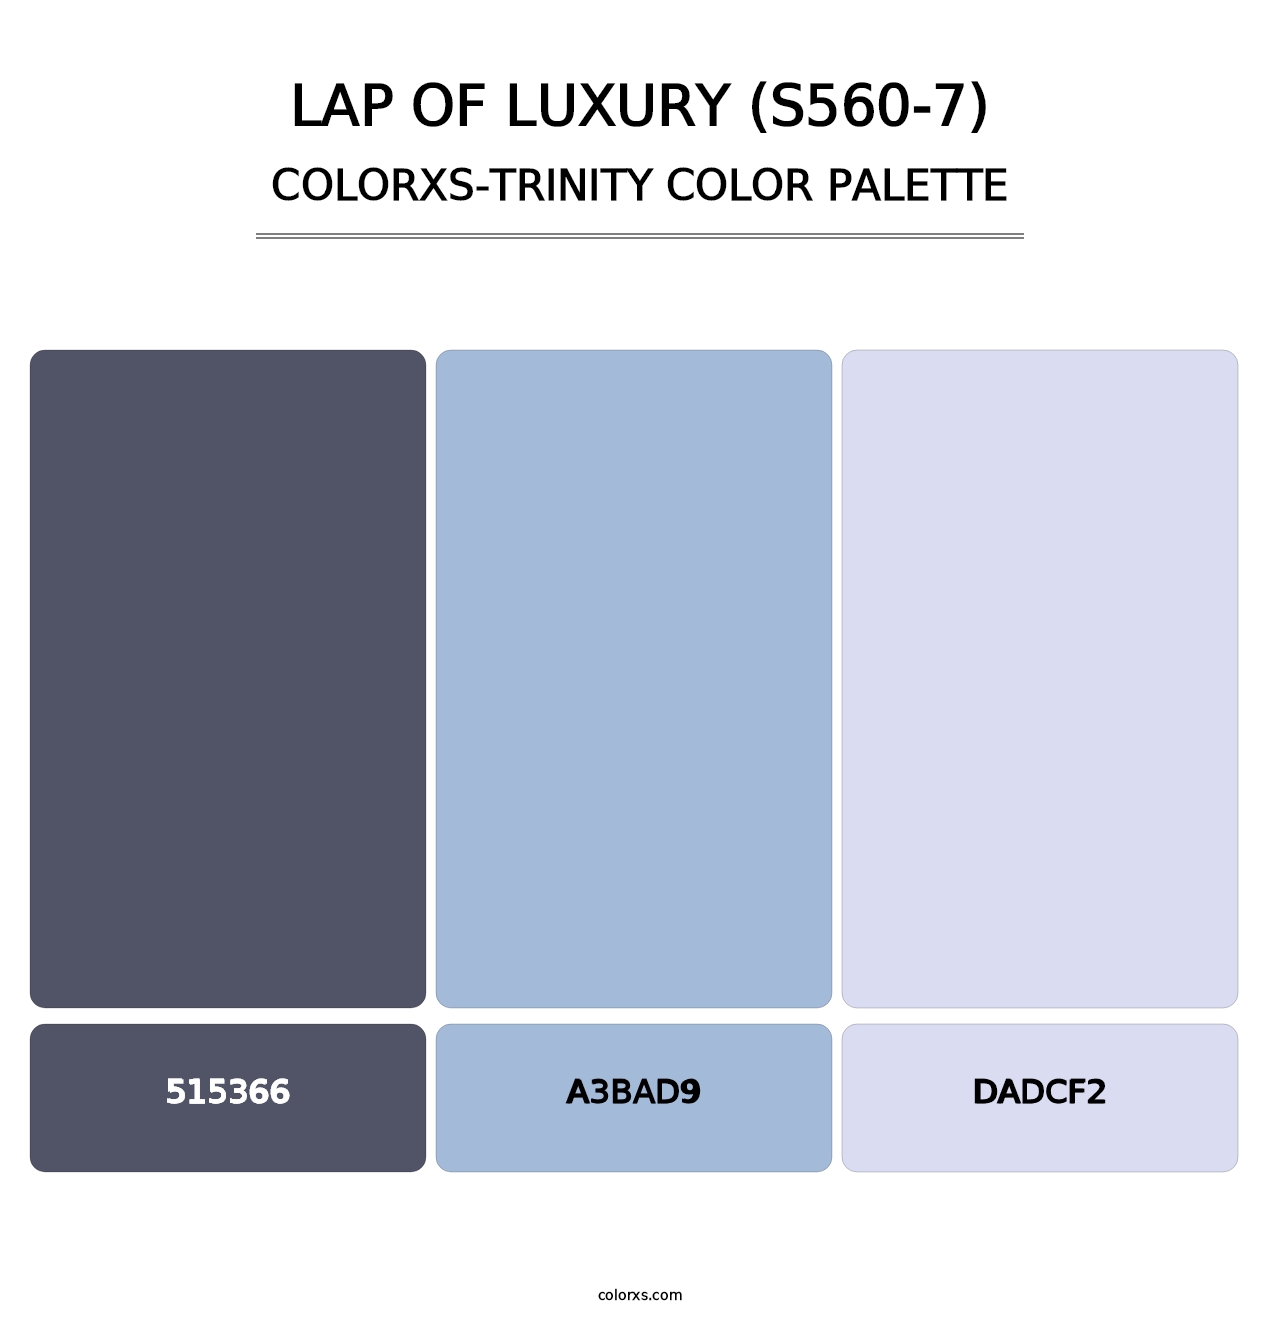 Lap Of Luxury (S560-7) - Colorxs Trinity Palette